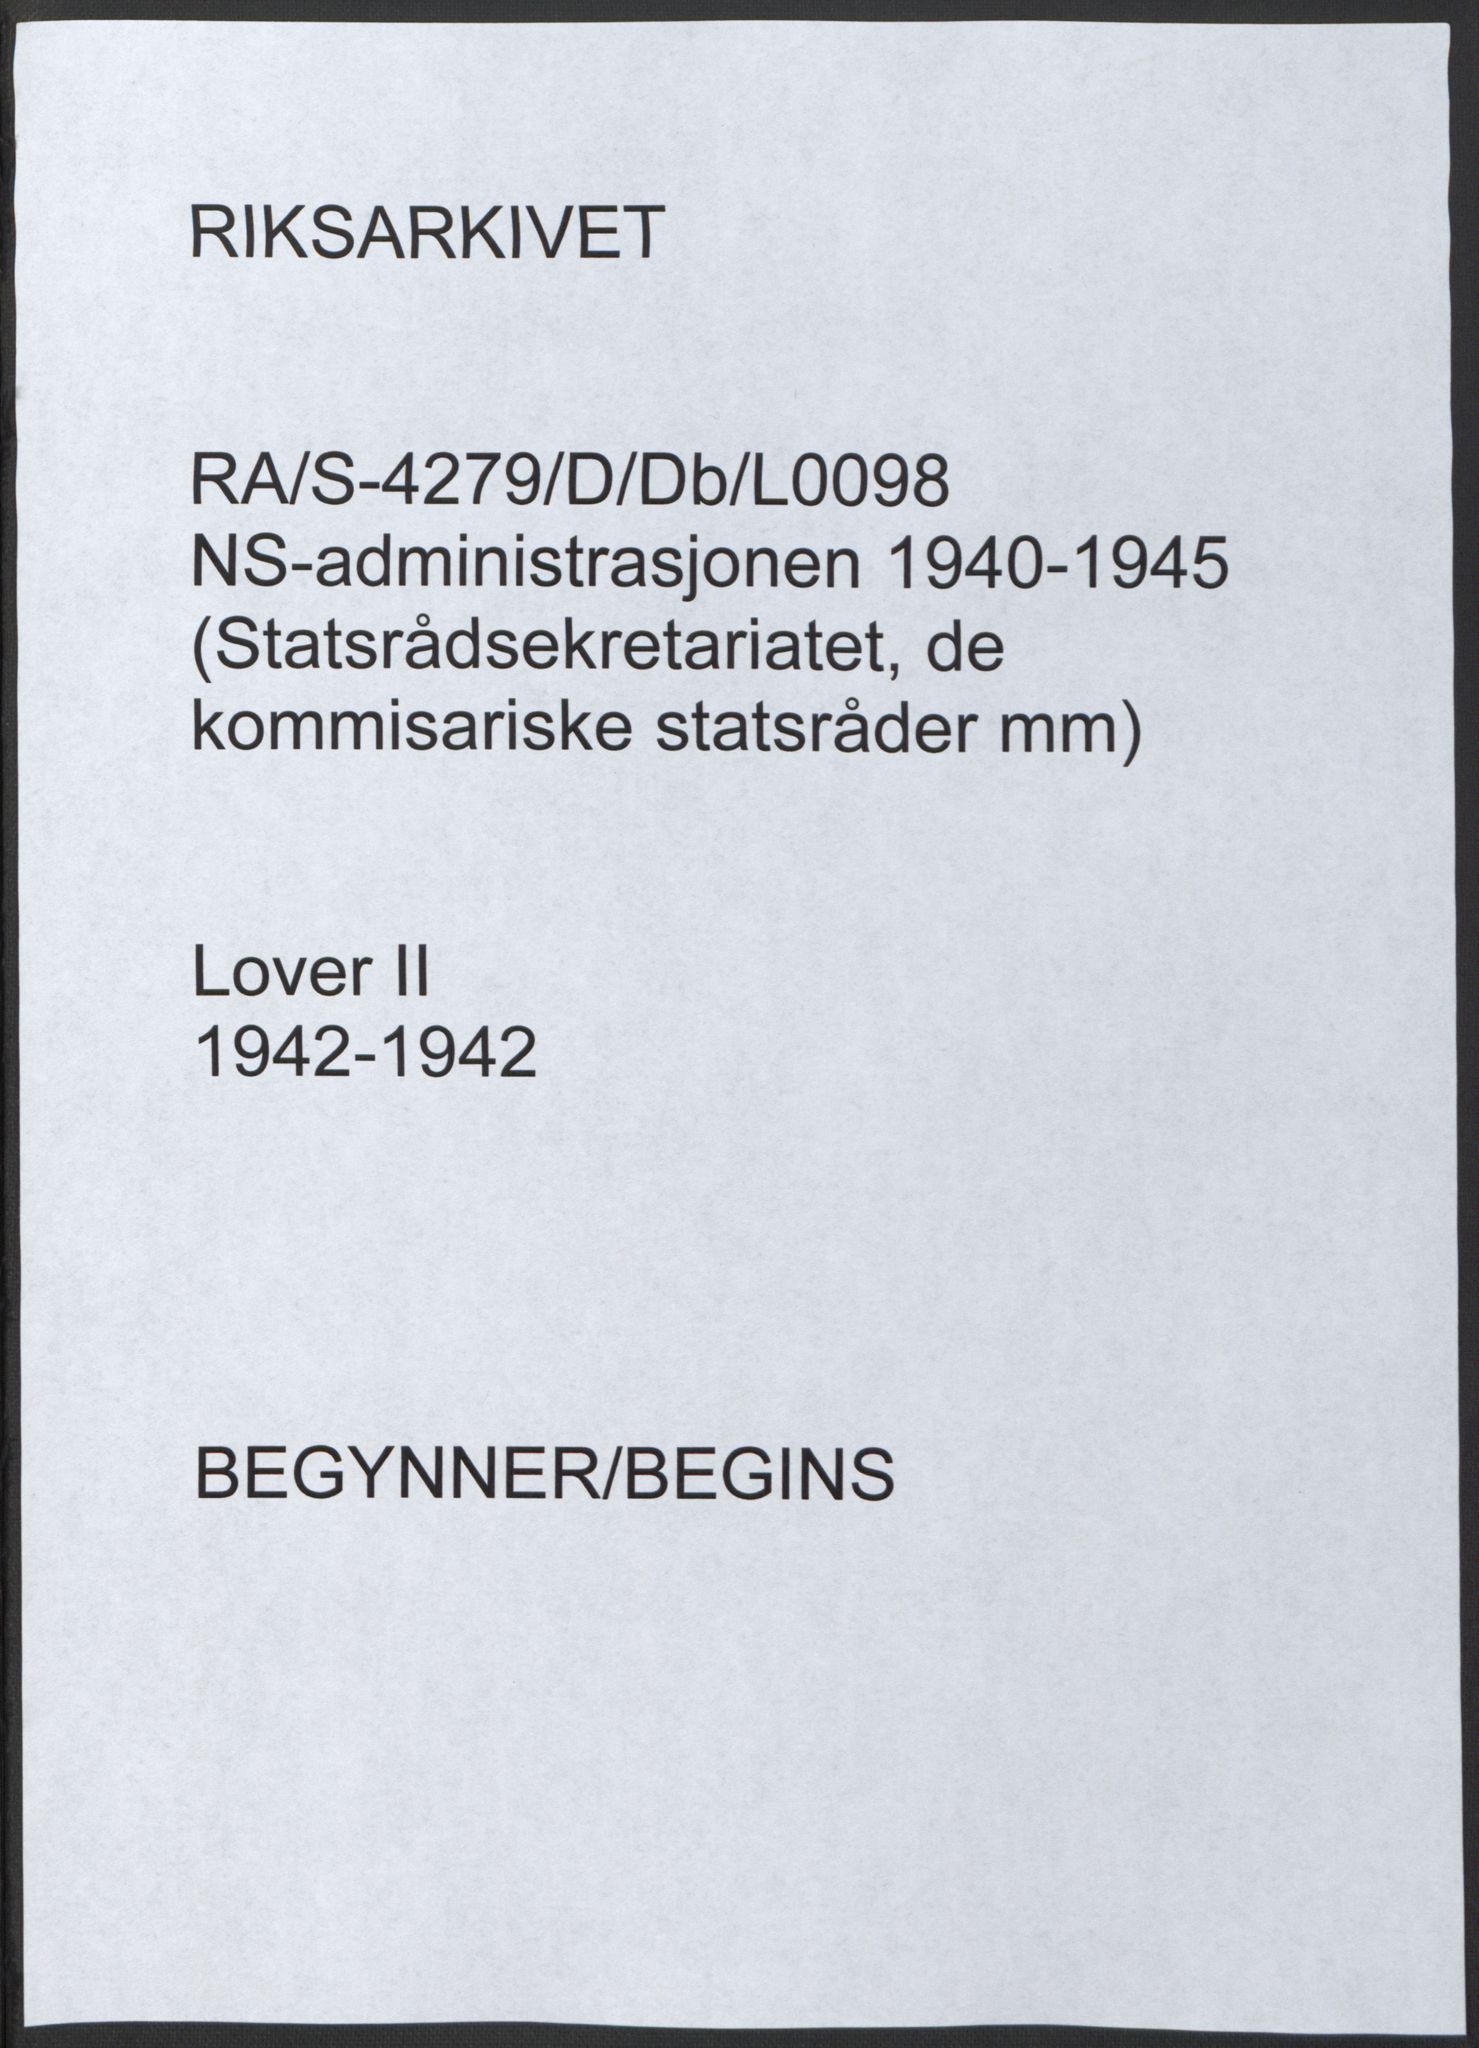 NS-administrasjonen 1940-1945 (Statsrådsekretariatet, de kommisariske statsråder mm), RA/S-4279/D/Db/L0098: Lover II, 1942, p. 1